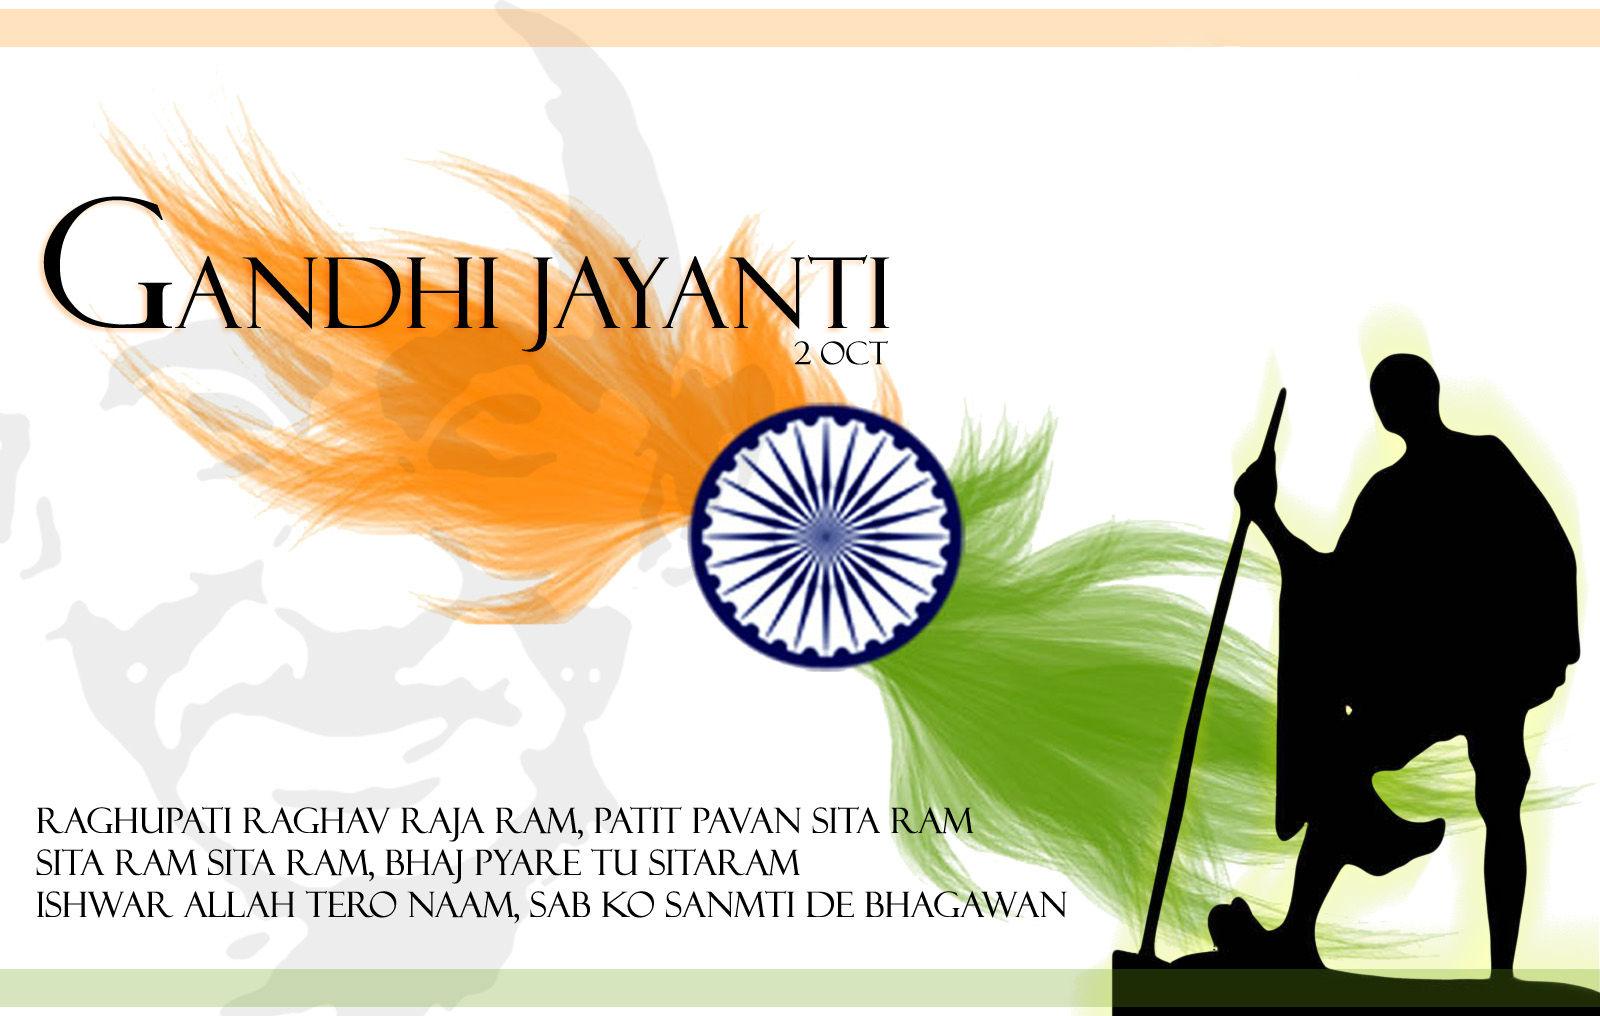 Mahatma Gandhi Jayanti wallpaper